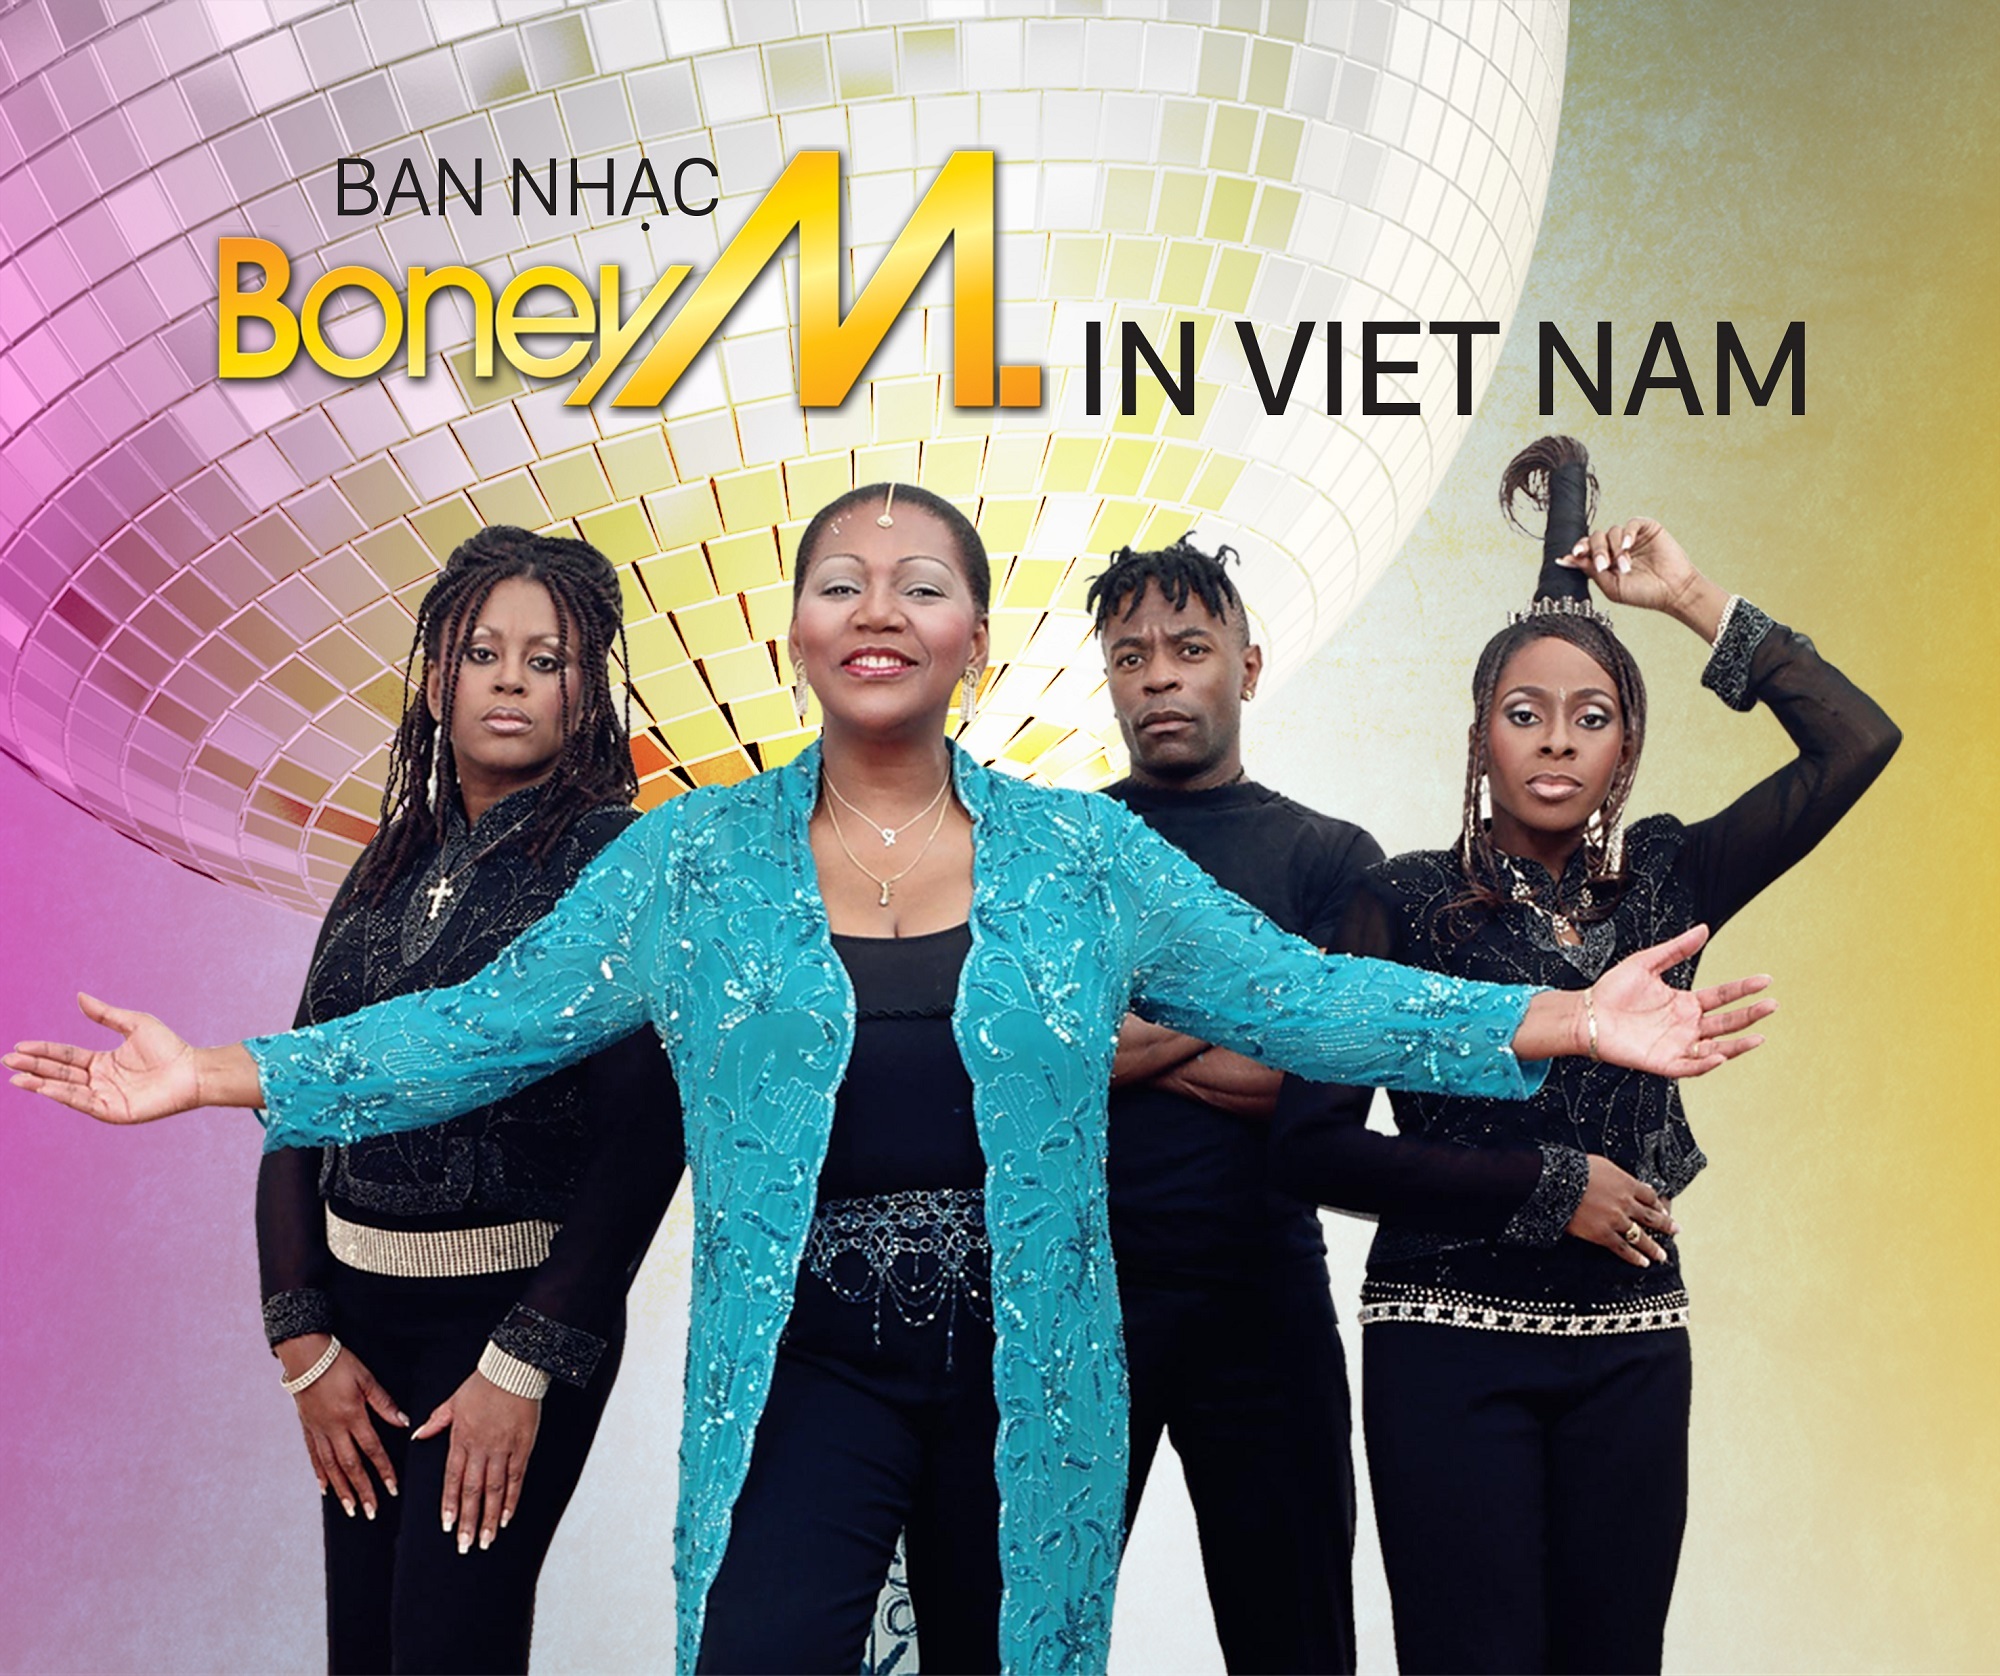 Boney m bahama. Boney m состав группы. Бони м состав группы. Солист группы Boney m. Группа Boney m. в 80.